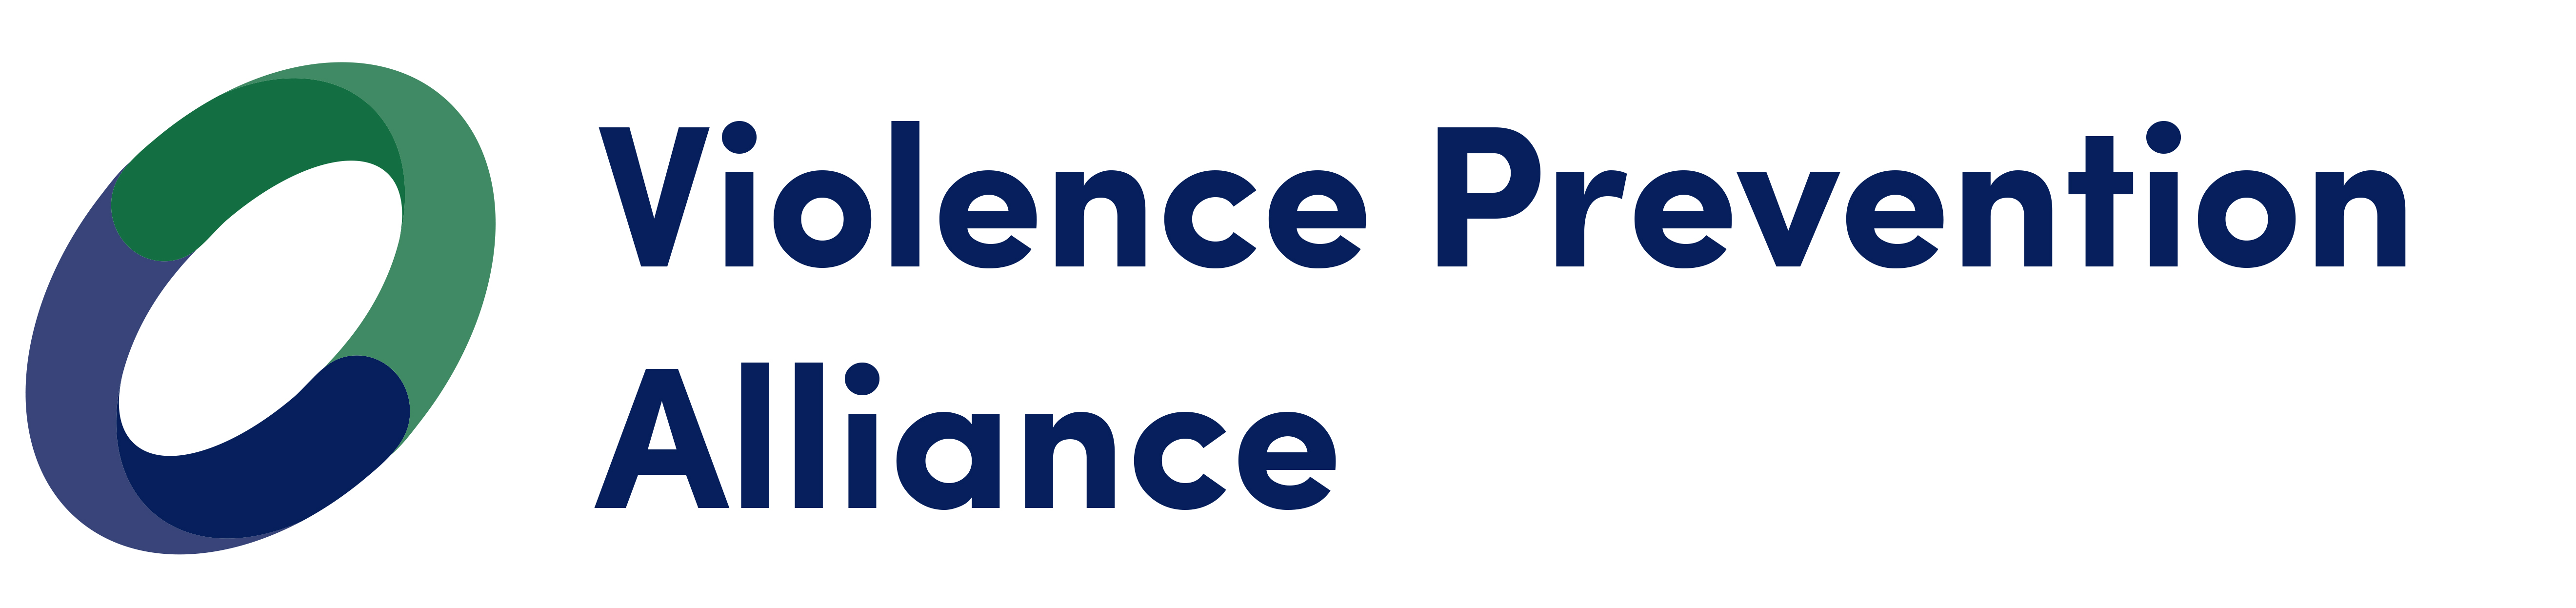 Violence Prevention Alliance Logo